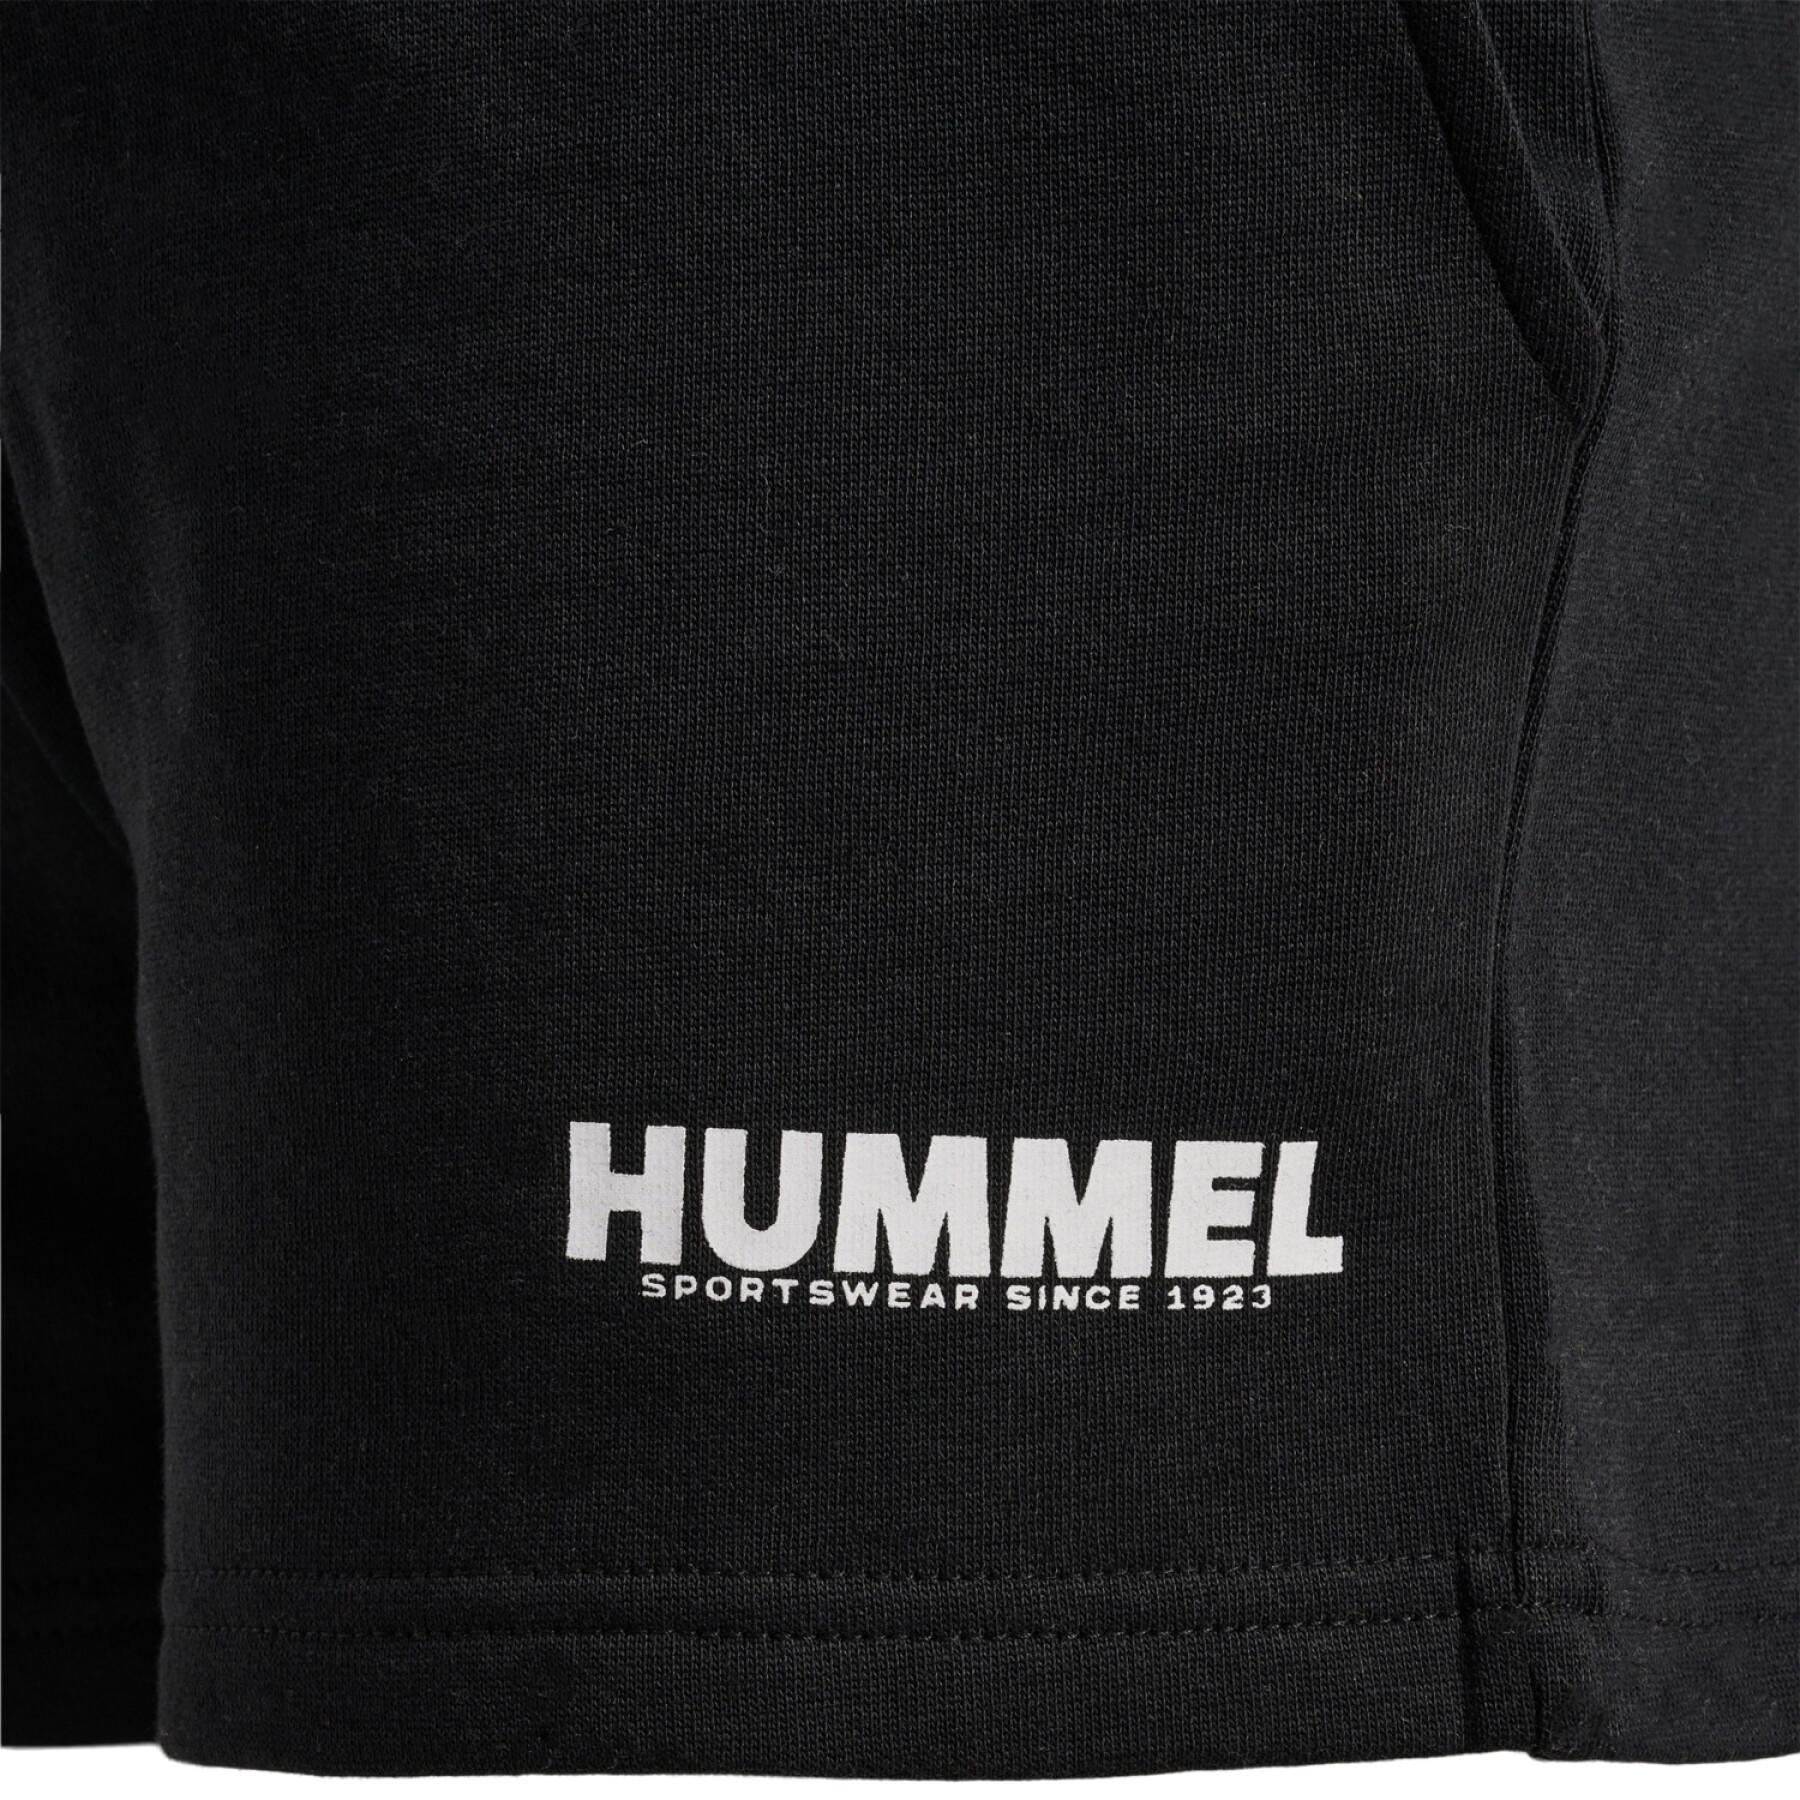 Women's shorts Hummel Legacy - Hummel - Brands - Lifestyle